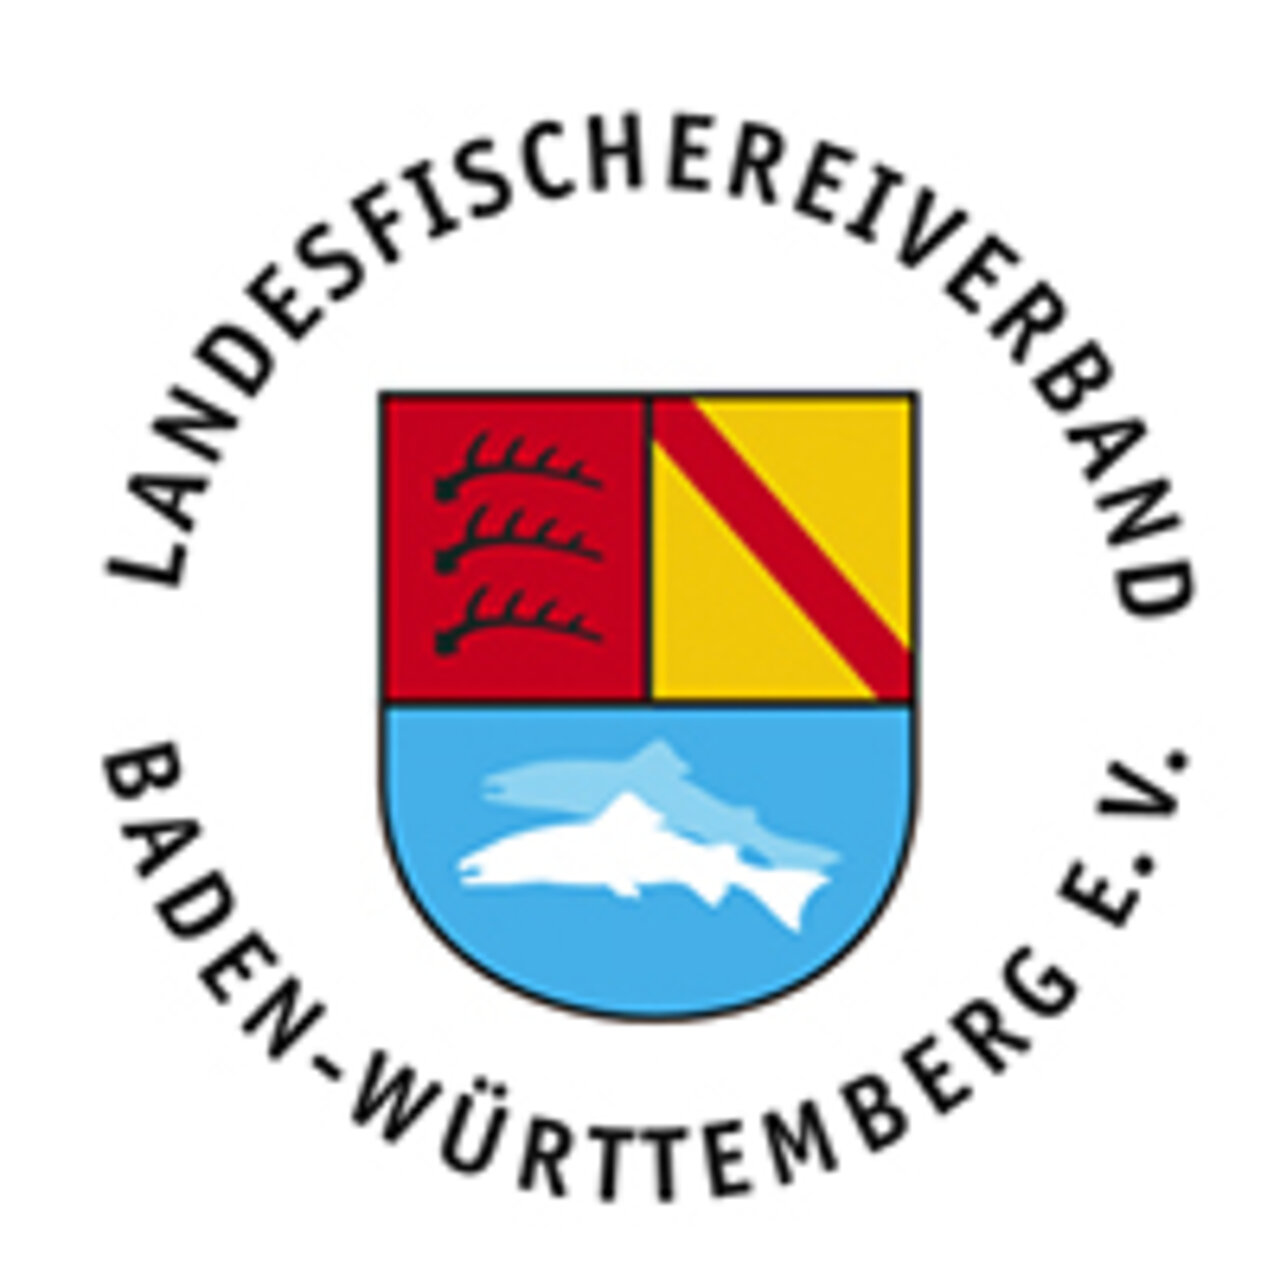 Verbandslogo Landesfischereiverband Baden-Württemberg e.V.